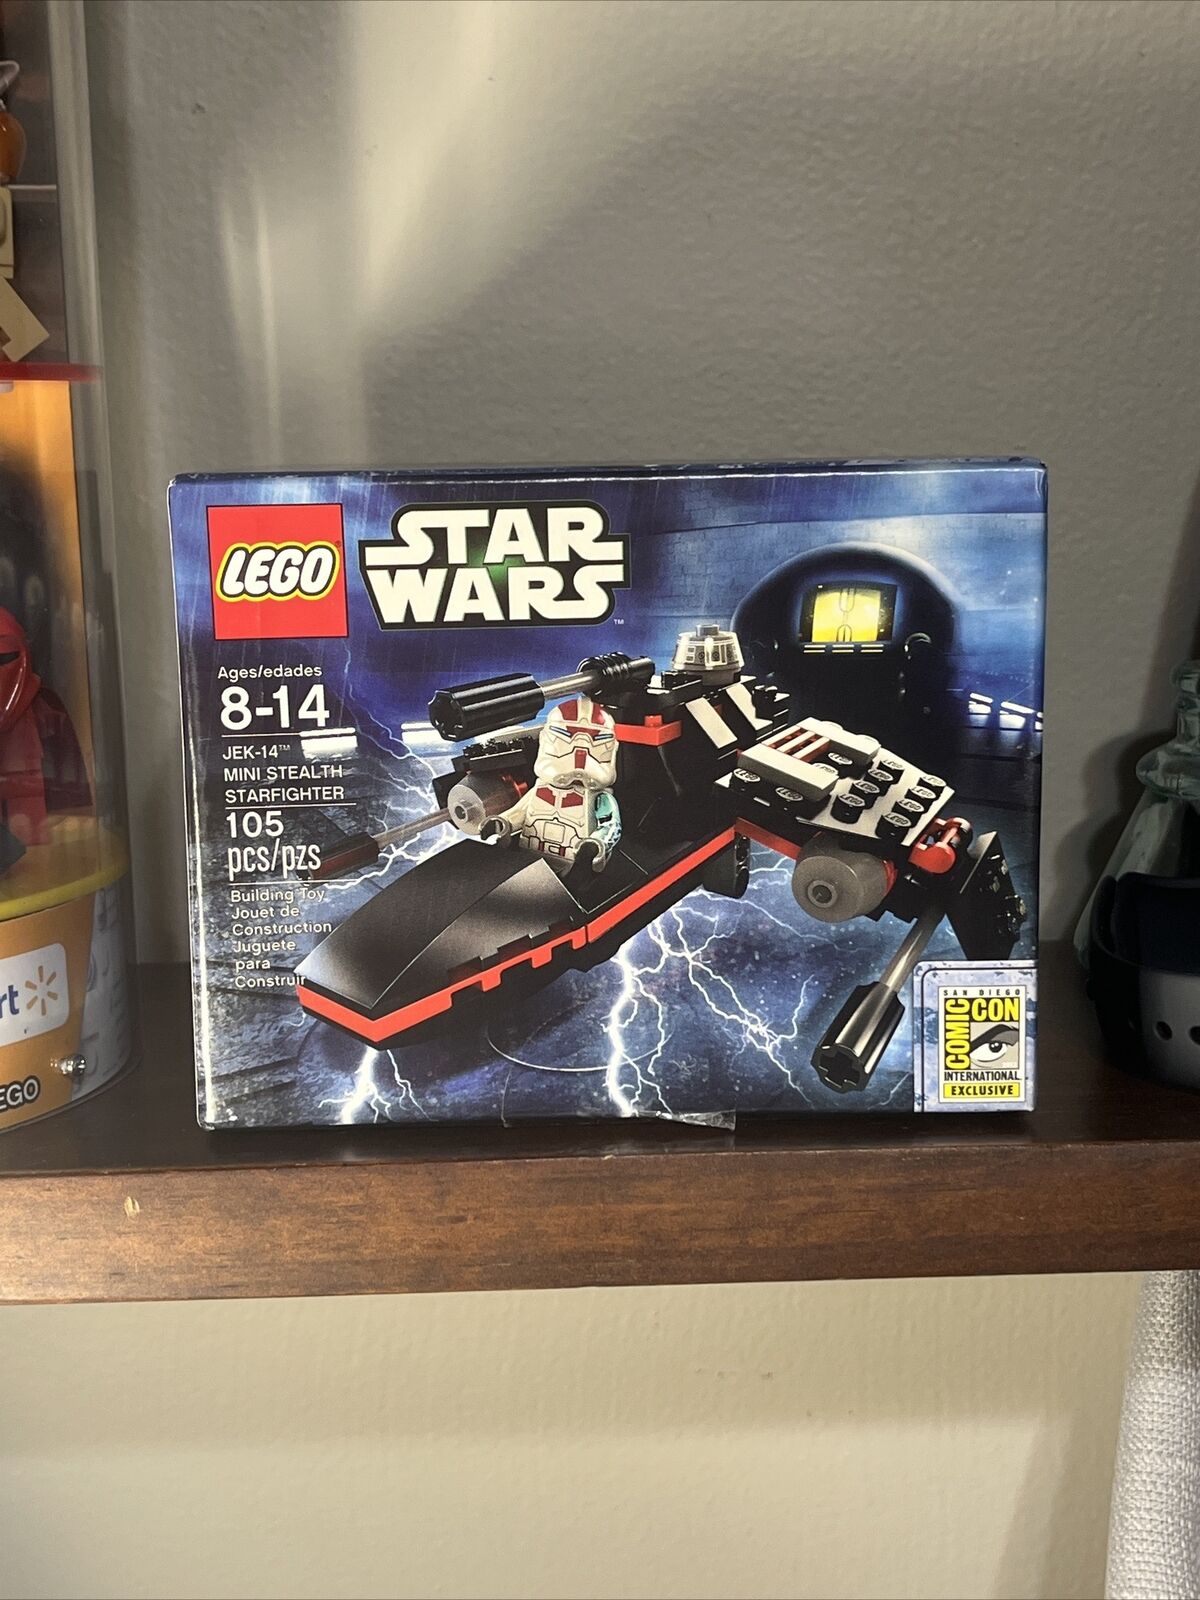 LEGO Star Wars Jek-14 Mini Stealth Starfighter - New with Damaged Seal